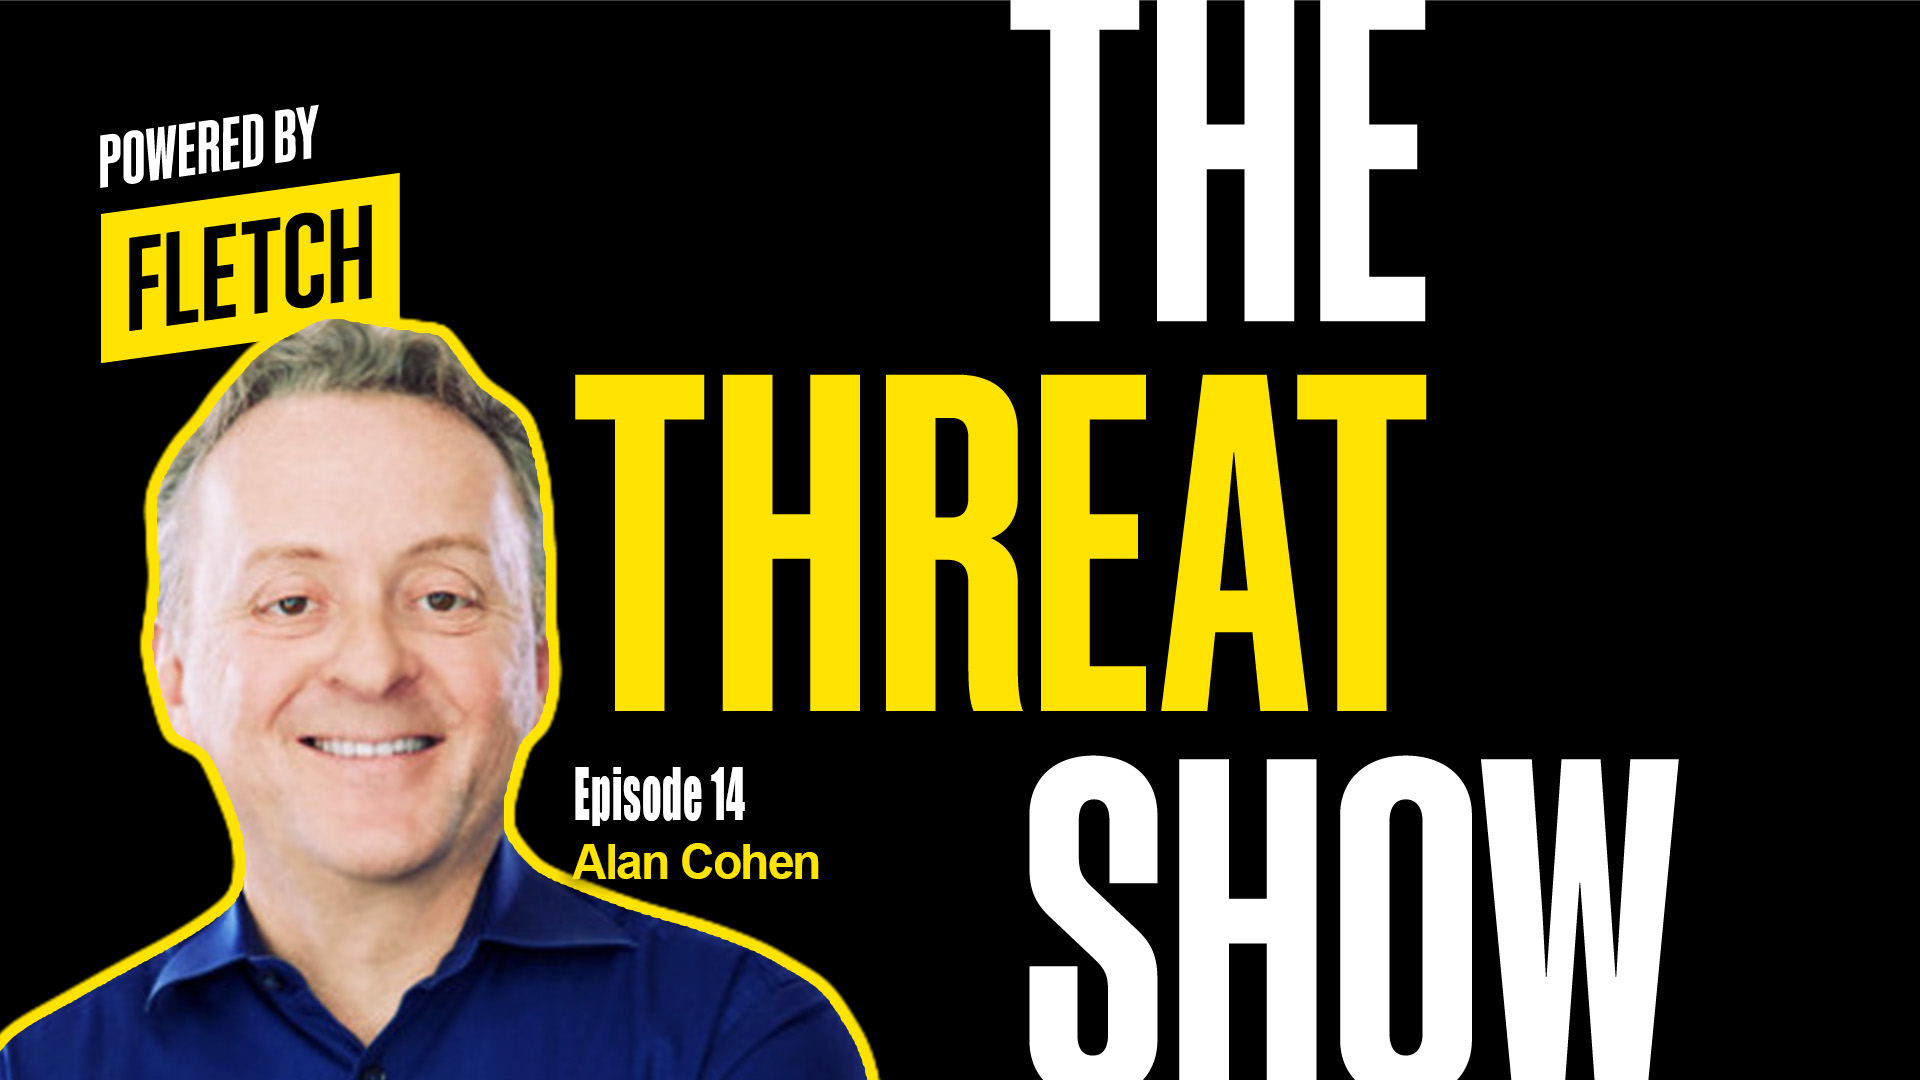 The Threat Show Ep. 14 w/ Alan Cohen